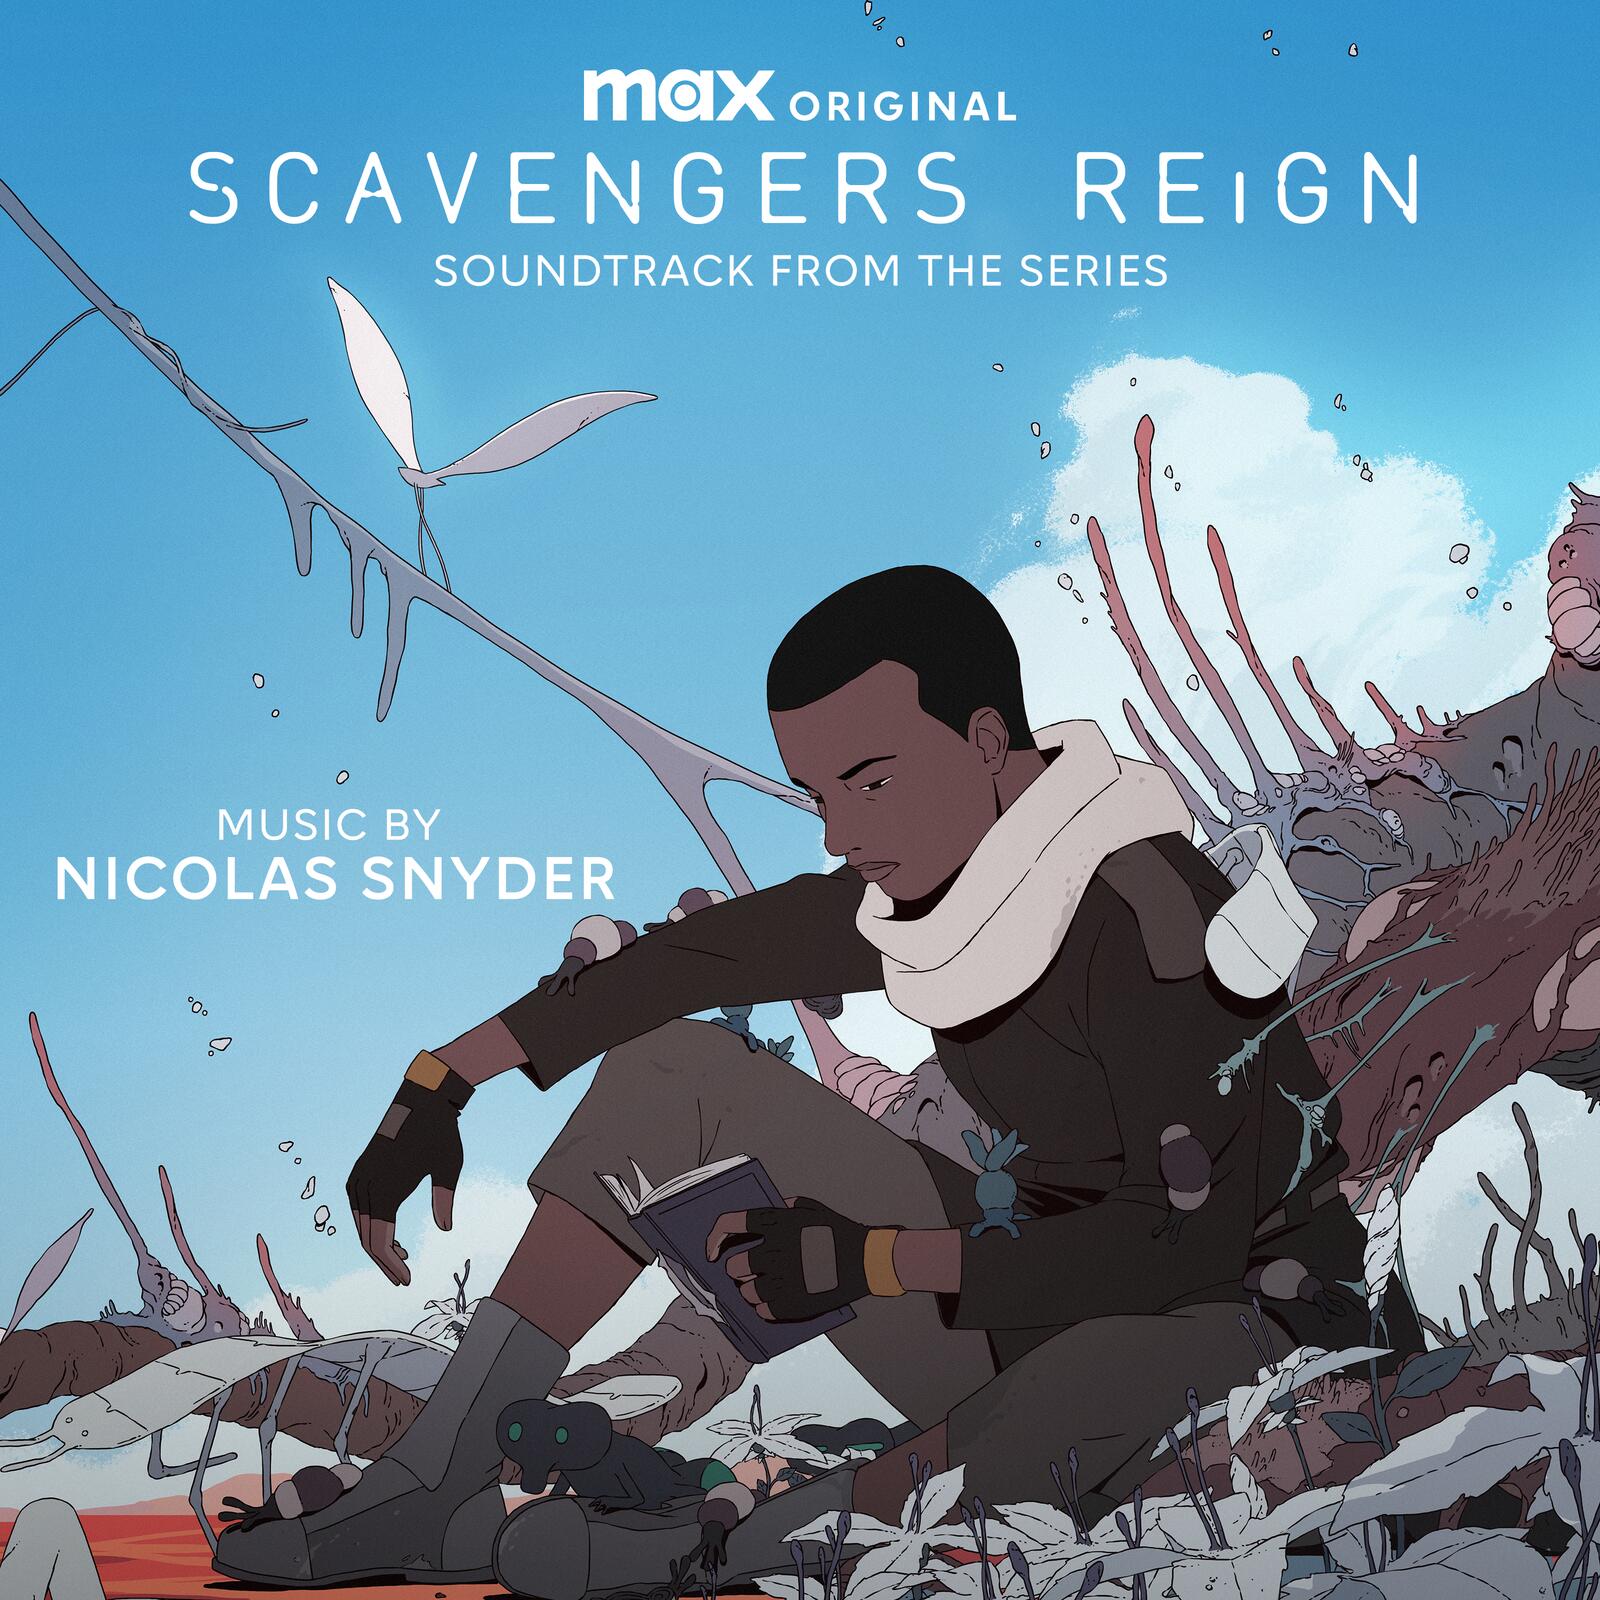 Scavengers Reign (Original Max Series Soundtrack) Season 1